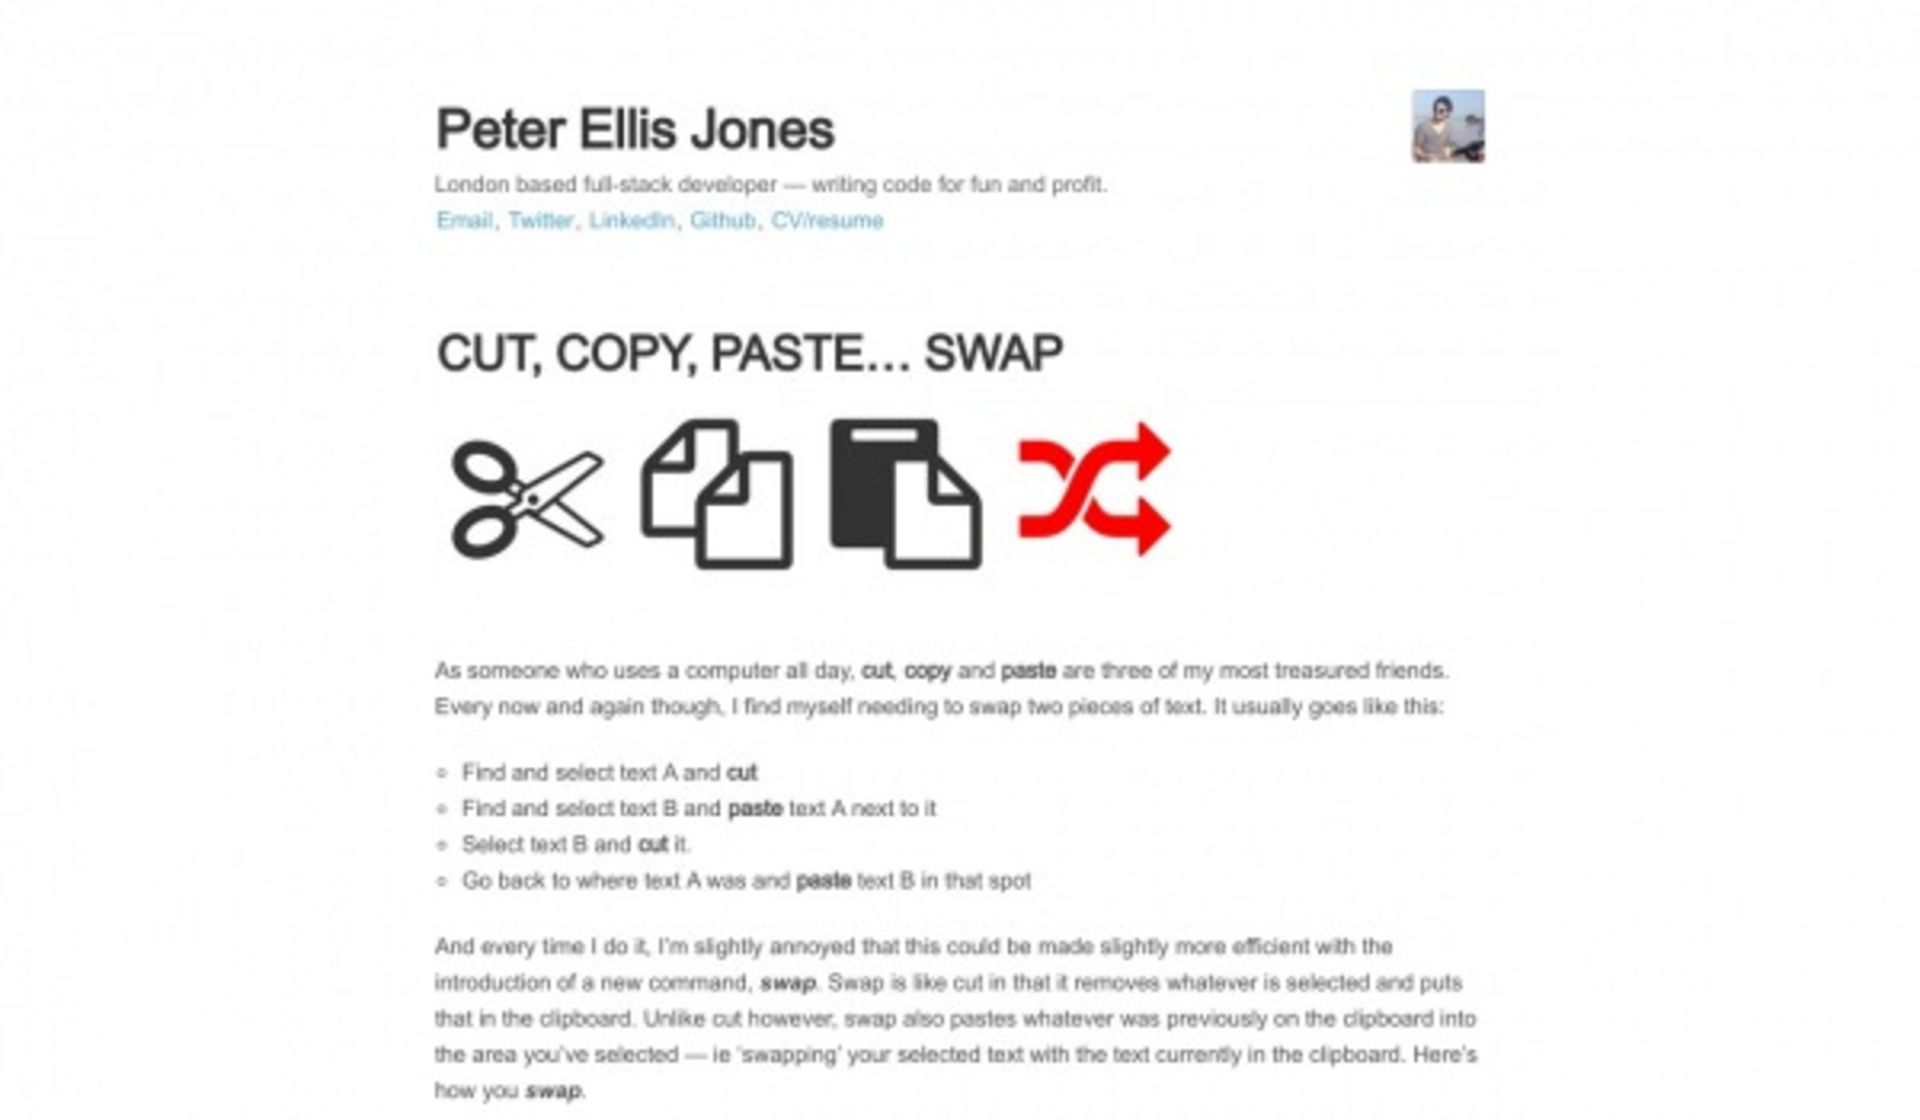 http  peterellisjones.com post 70523368919 cut-copy-paste-swap